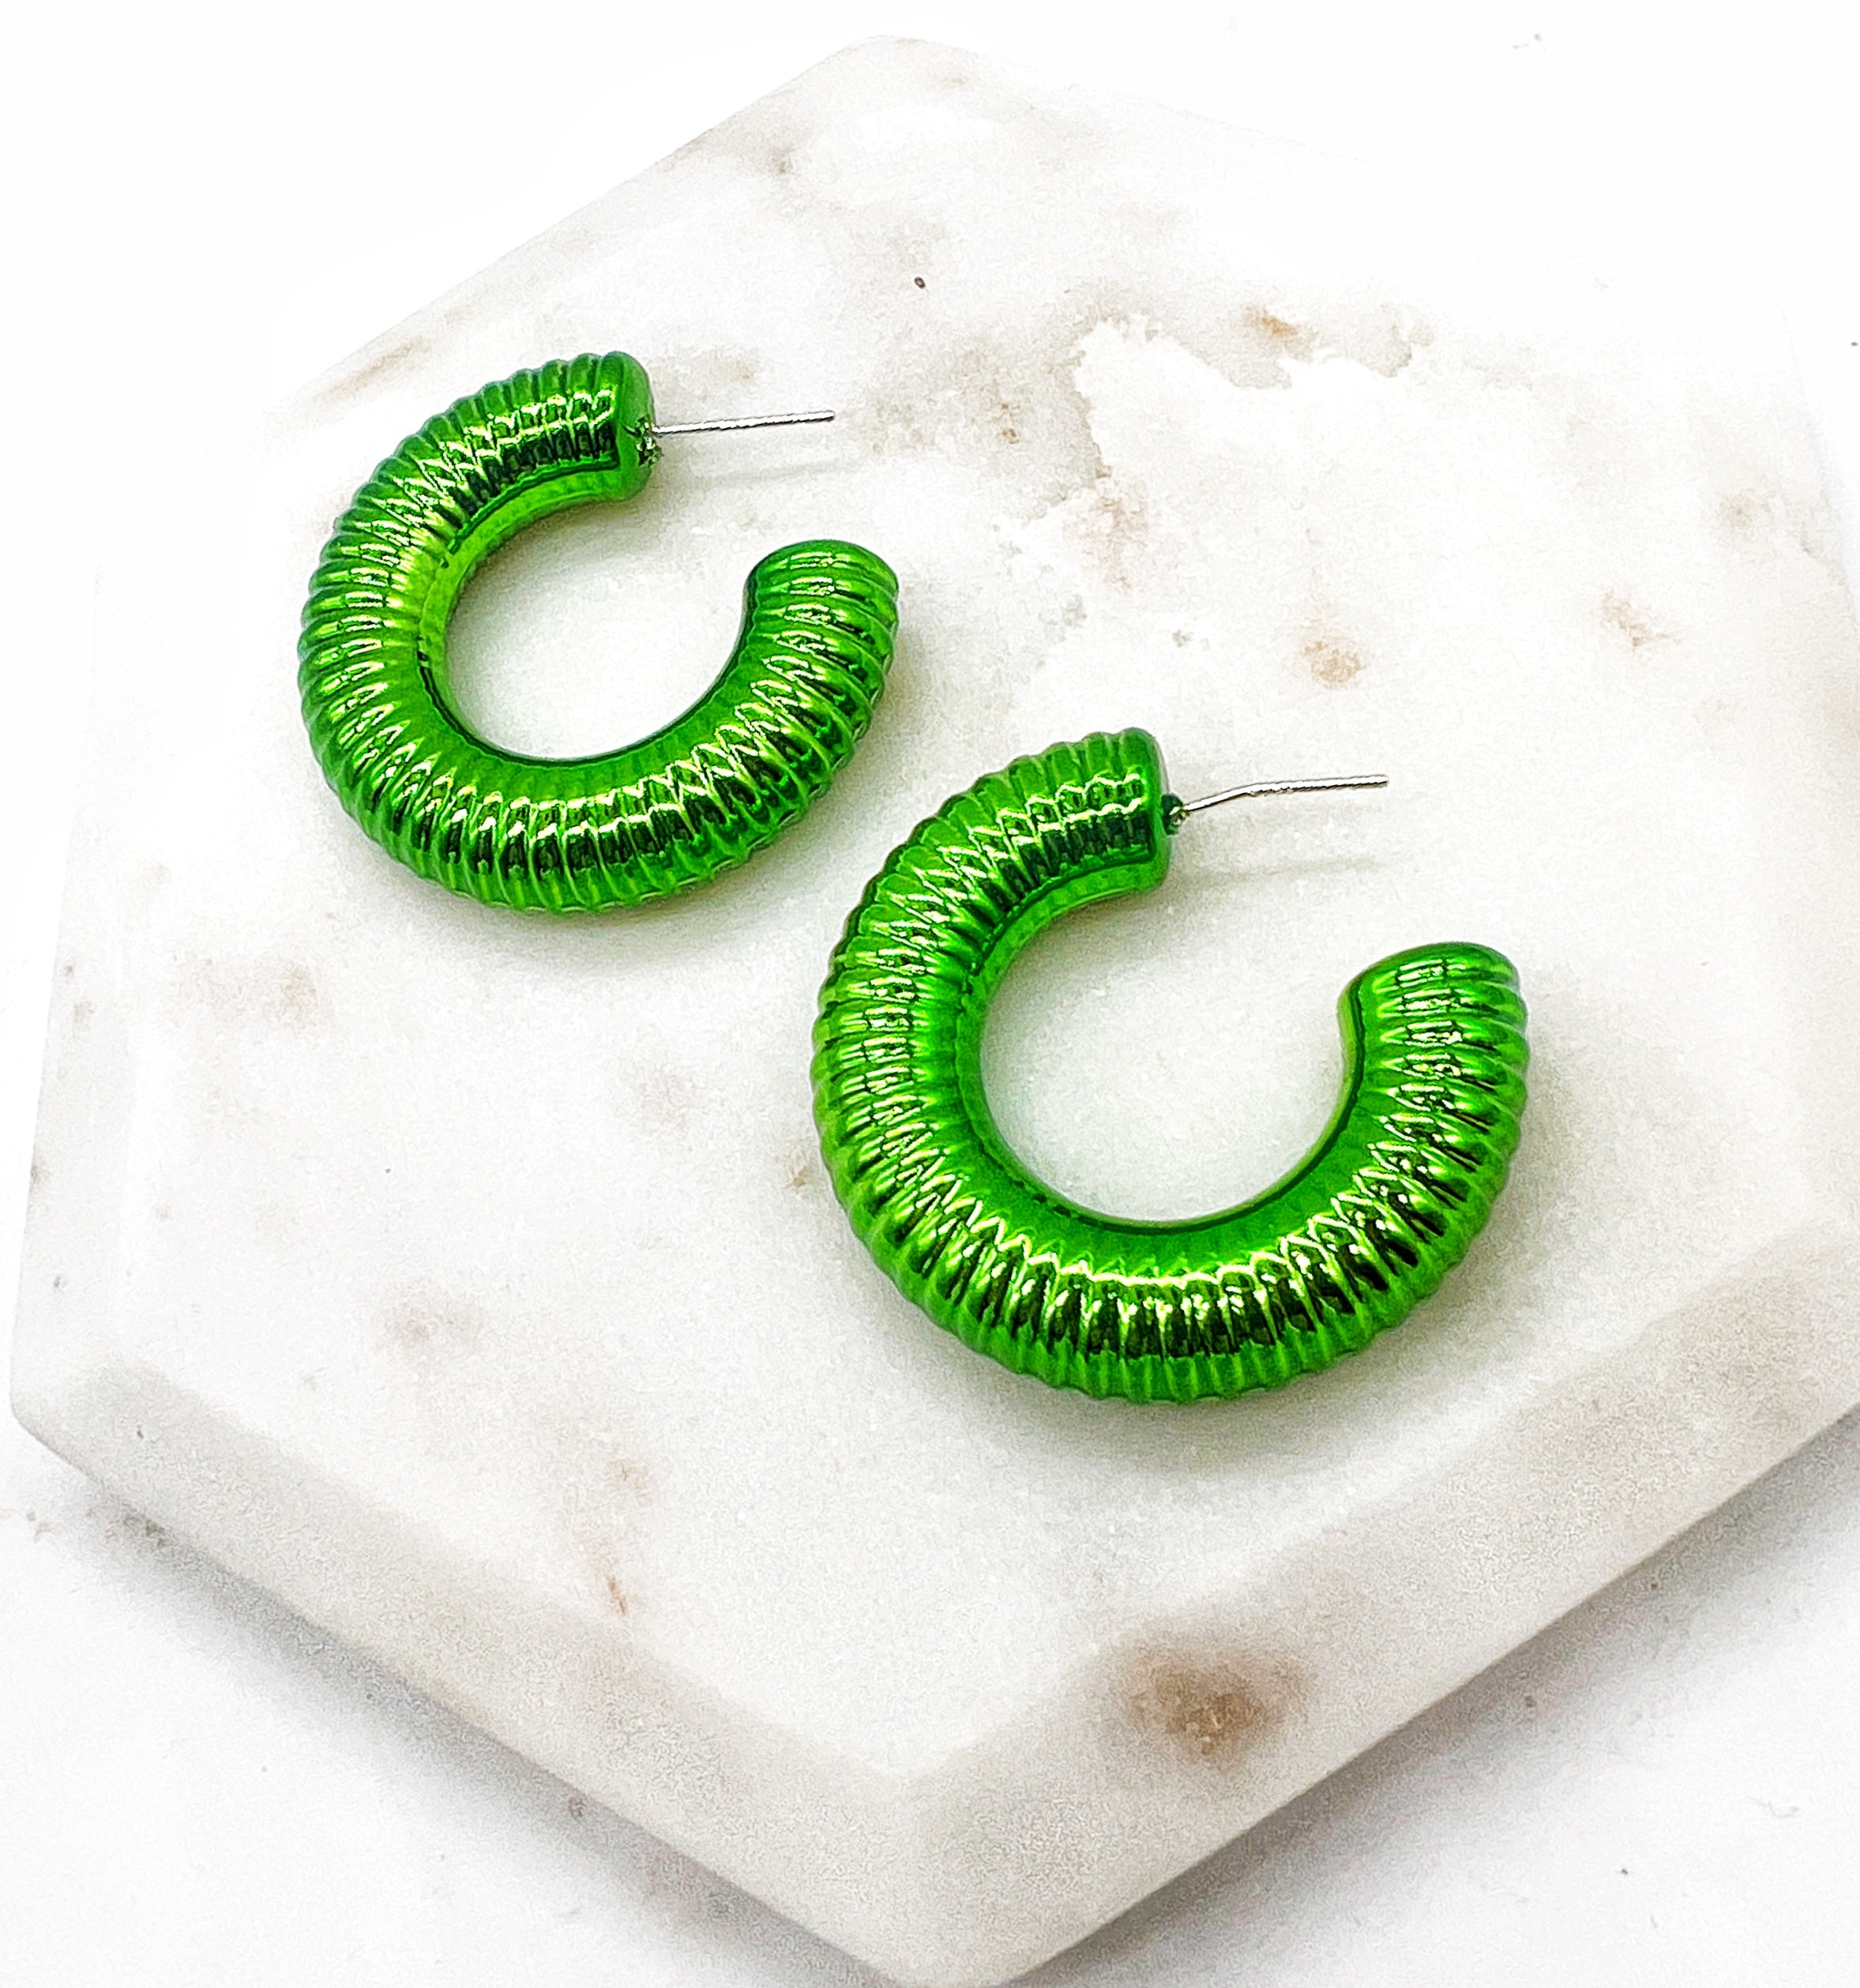 Green Chrome Acrylic Hoop Earrings